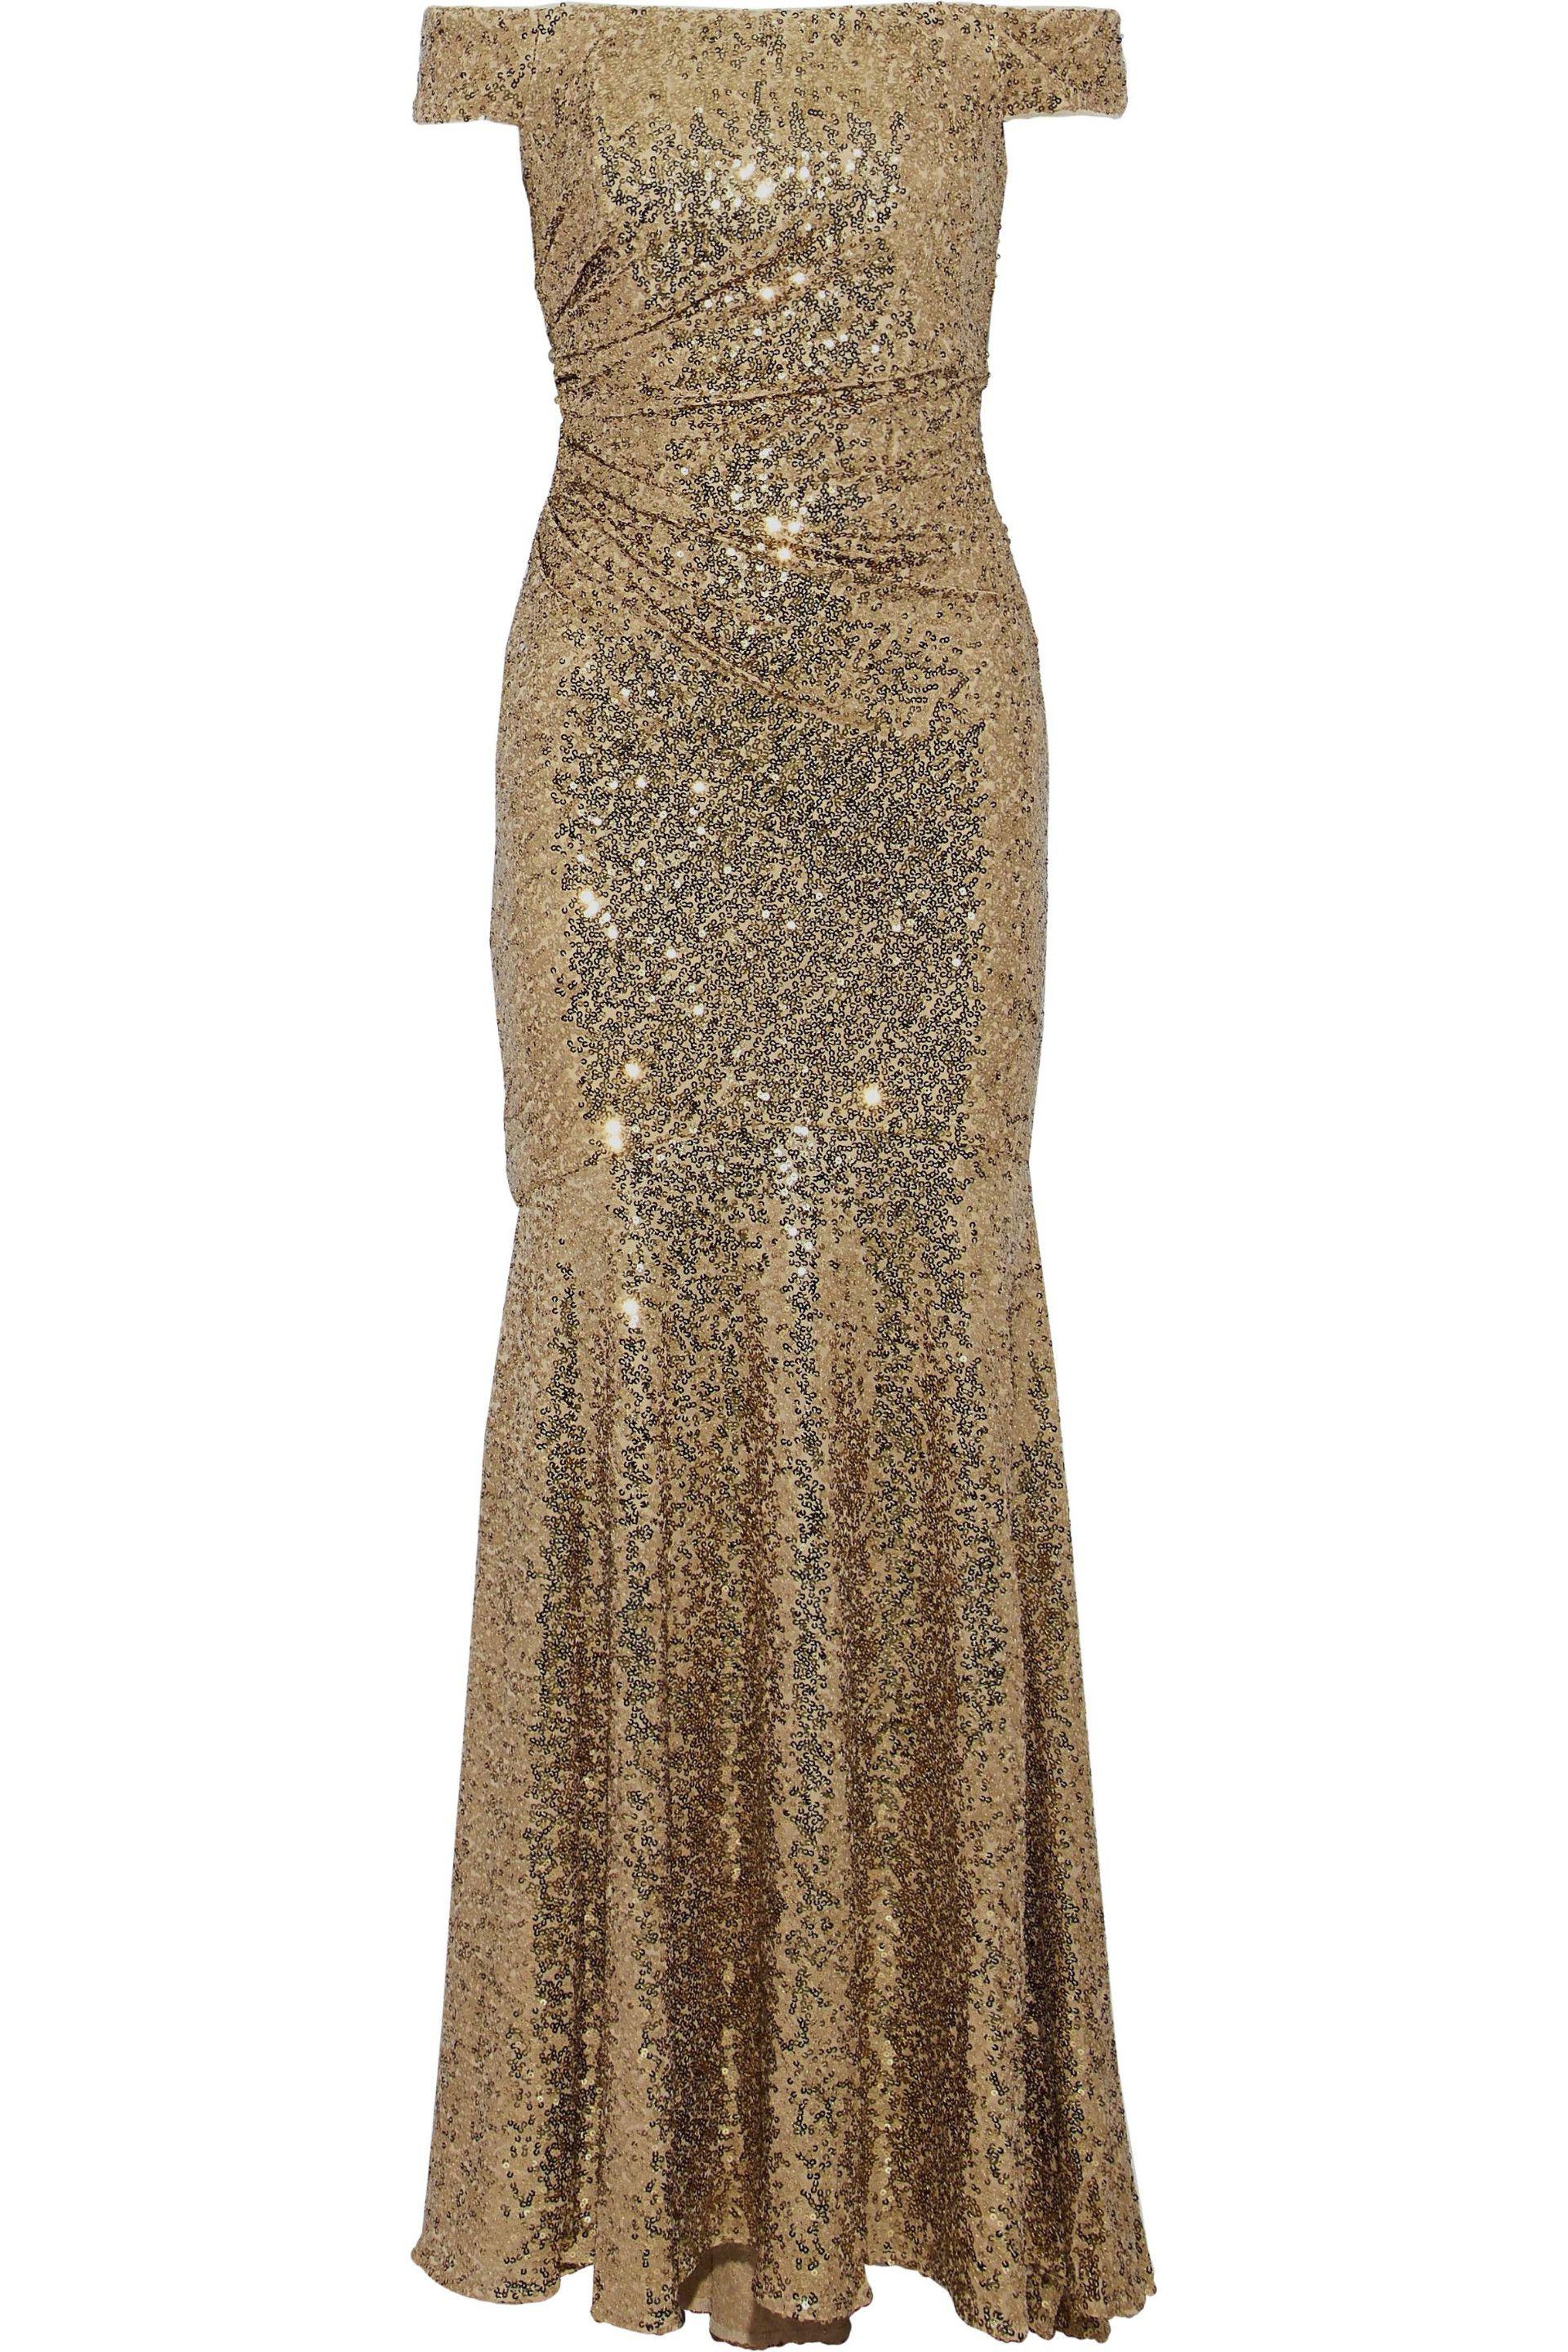 Badgley Mischka Off-the-shoulder Sequined Tulle Gown in Gold (Metallic ...